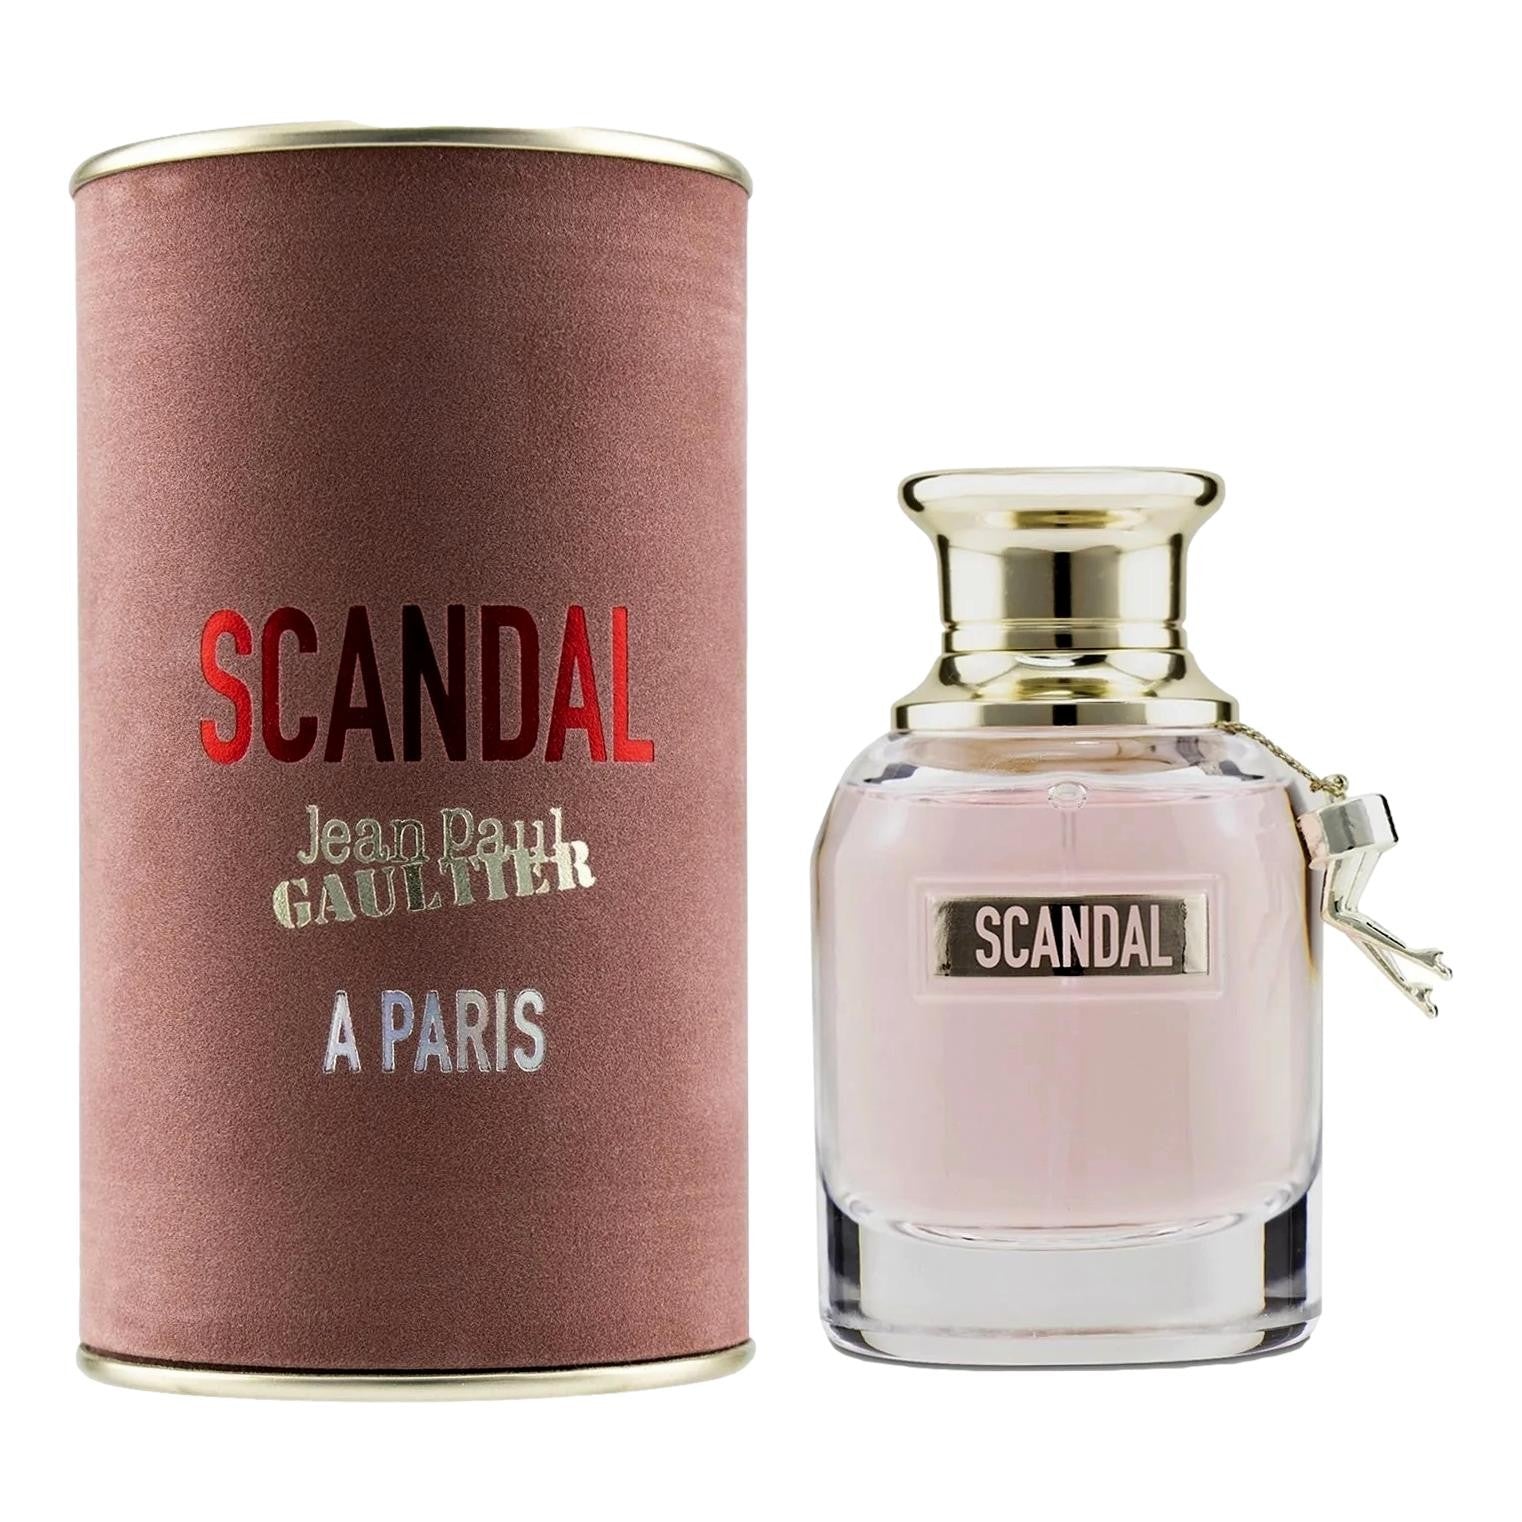 Scandal A Paris by Jean Paul Gaultier, 1 oz EDT Spray for Women